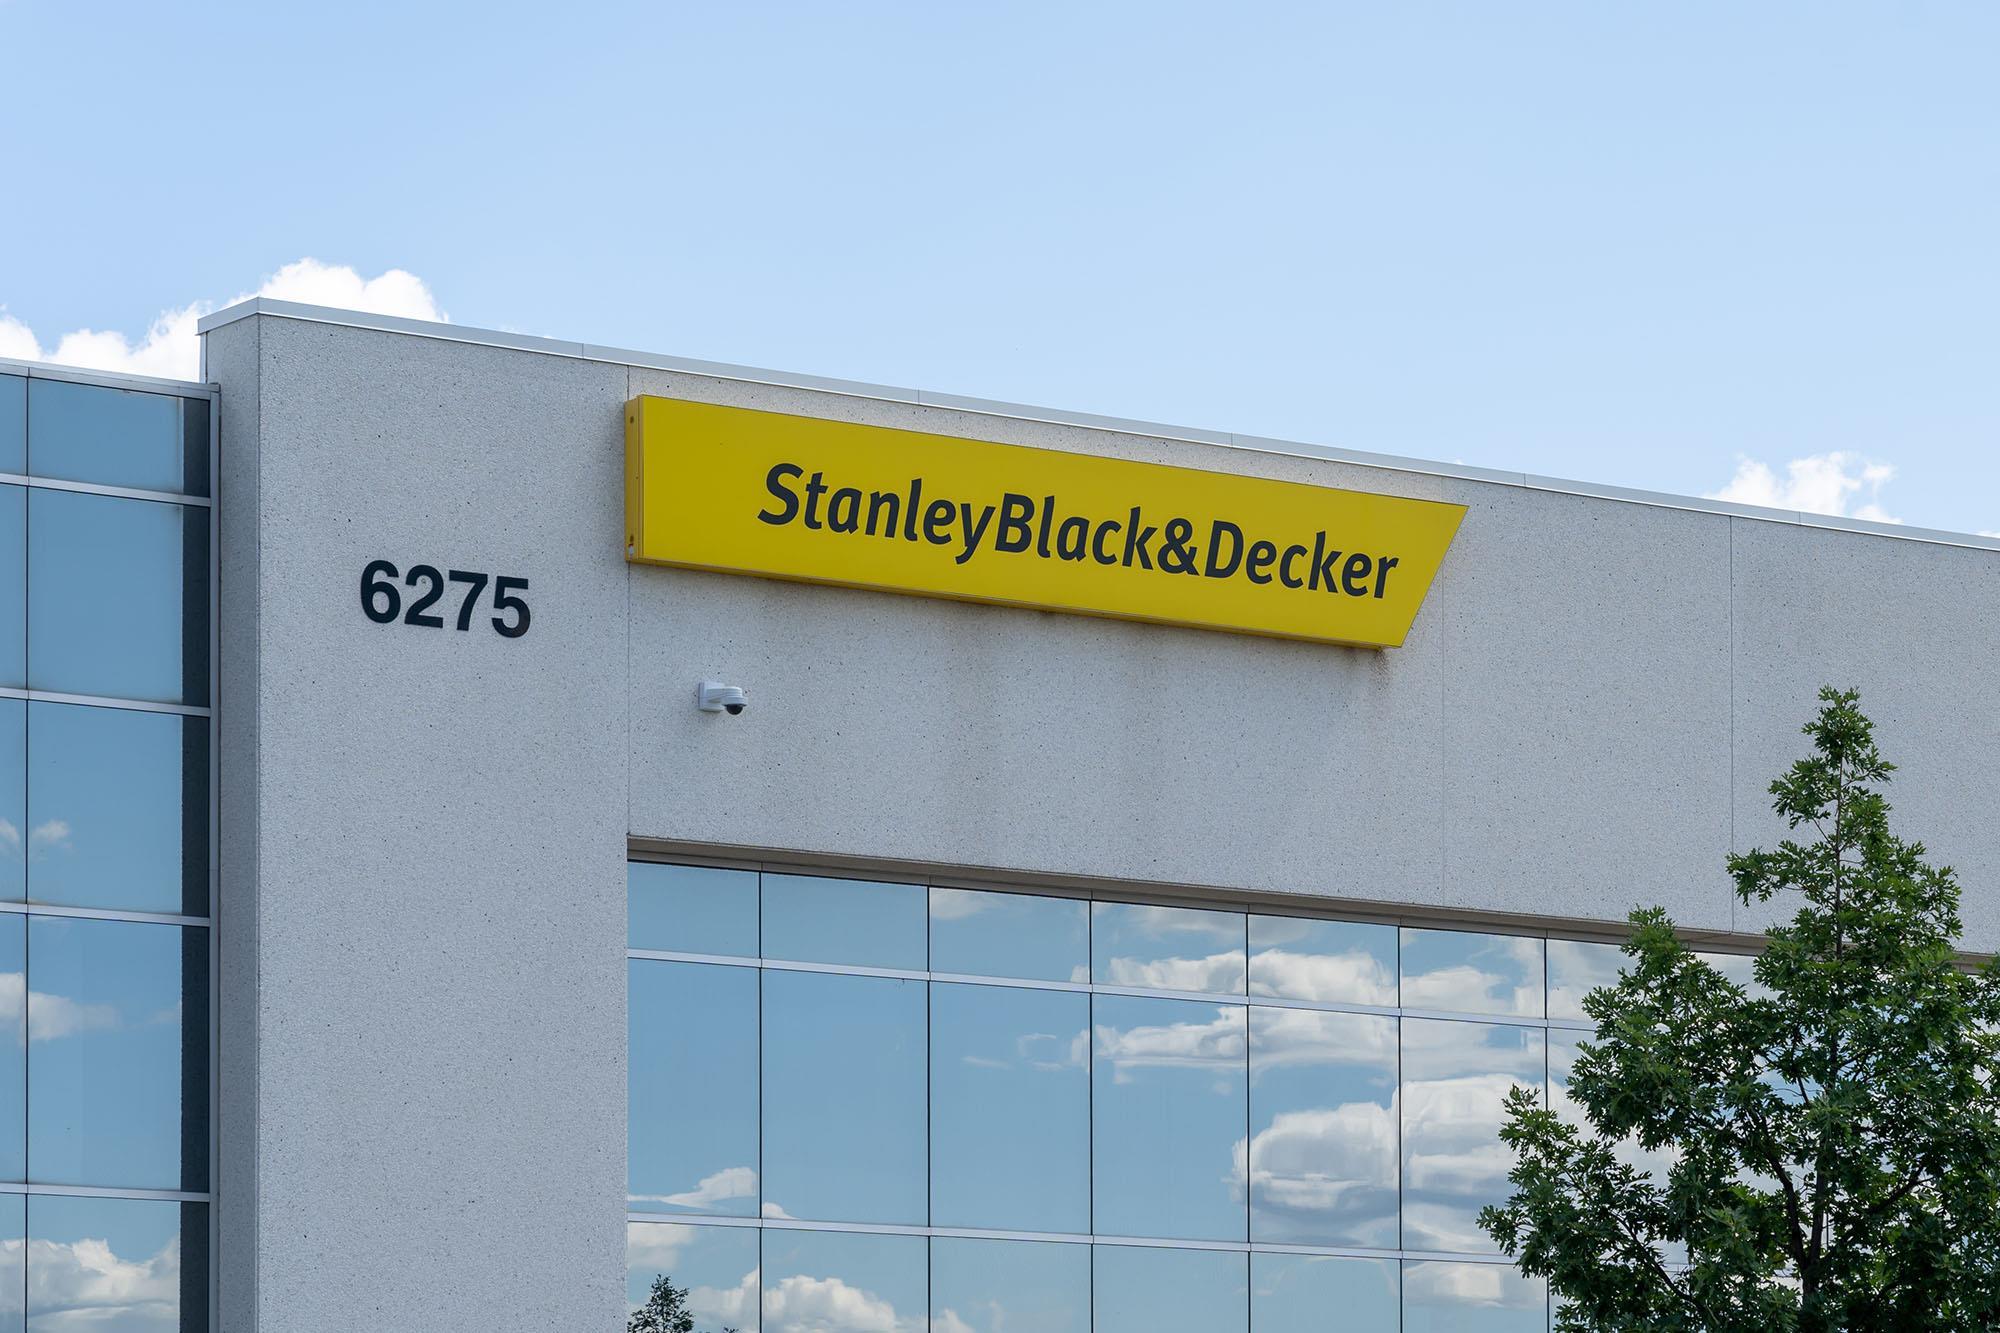 Stanley Black & Decker avoids fine in SEC executive perks case, News Brief